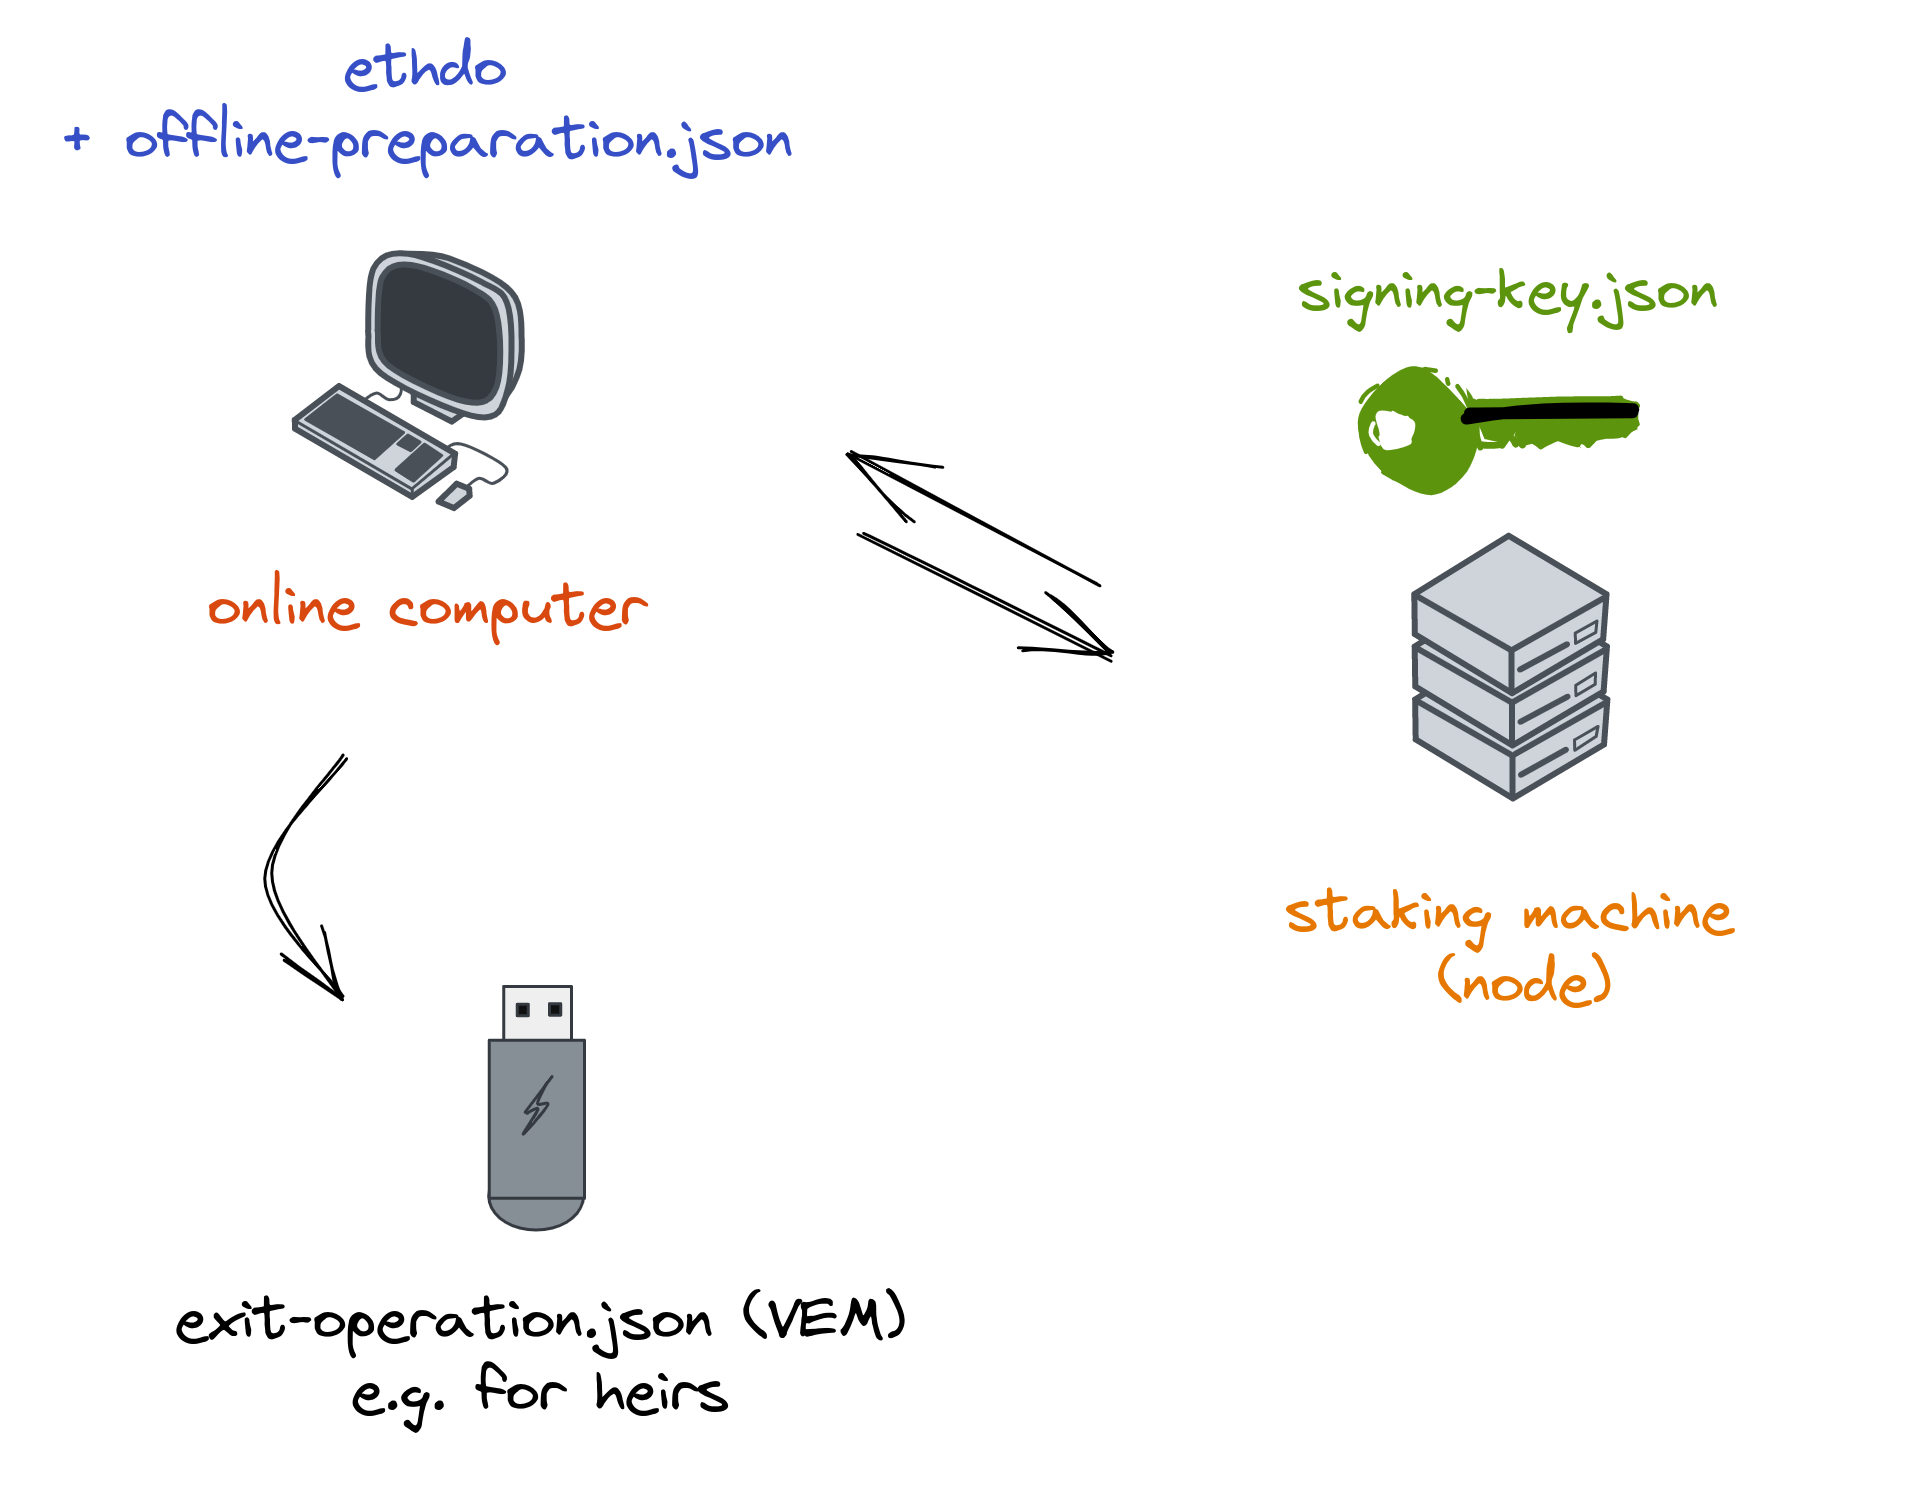 conceptual overview of an online VEM generation setup